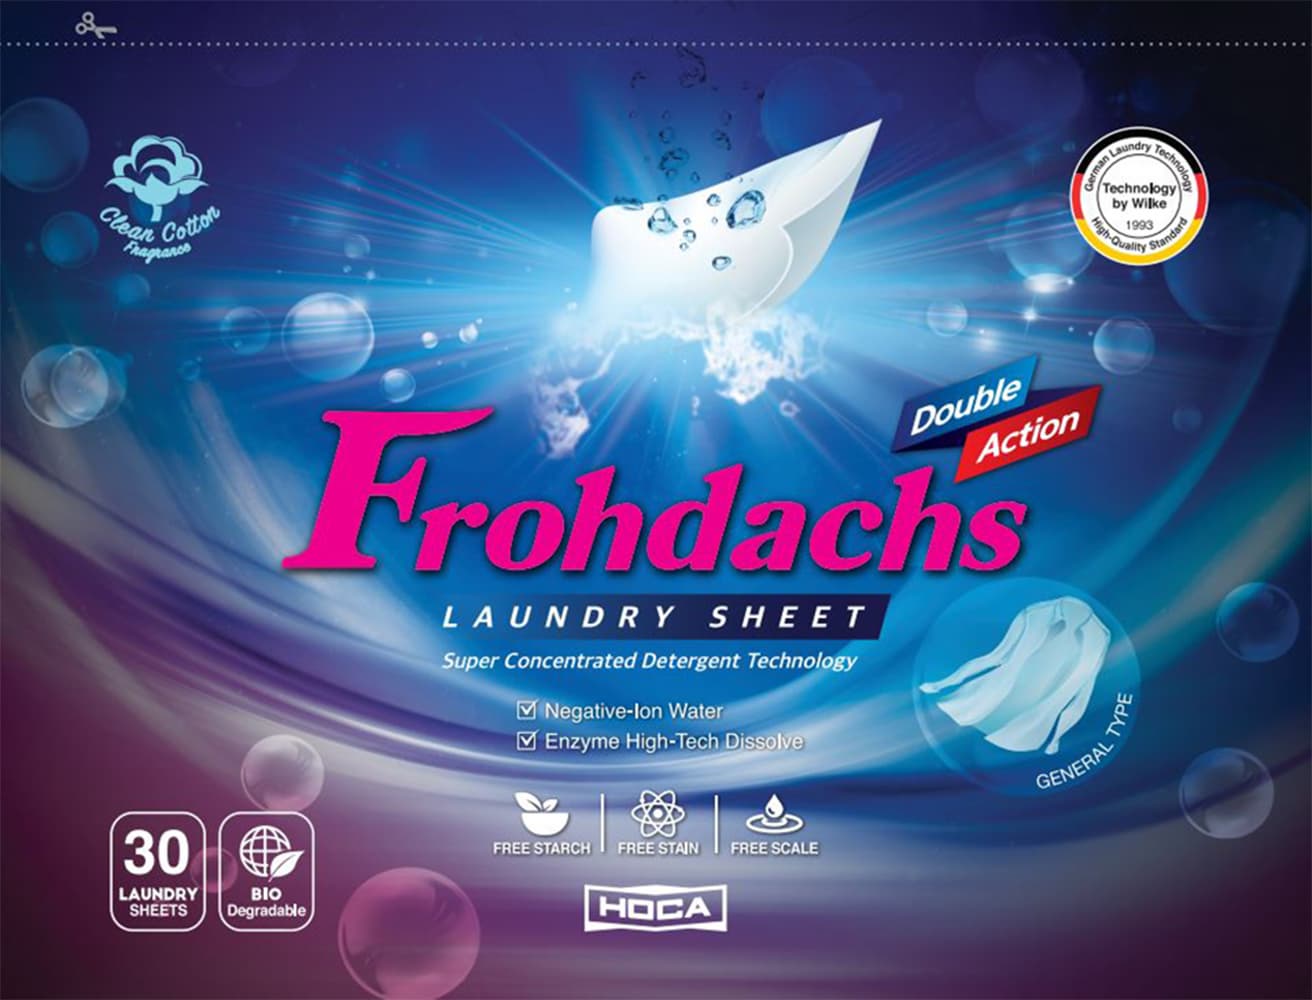 Frohdachs Double Action Launry Sheet Detergent